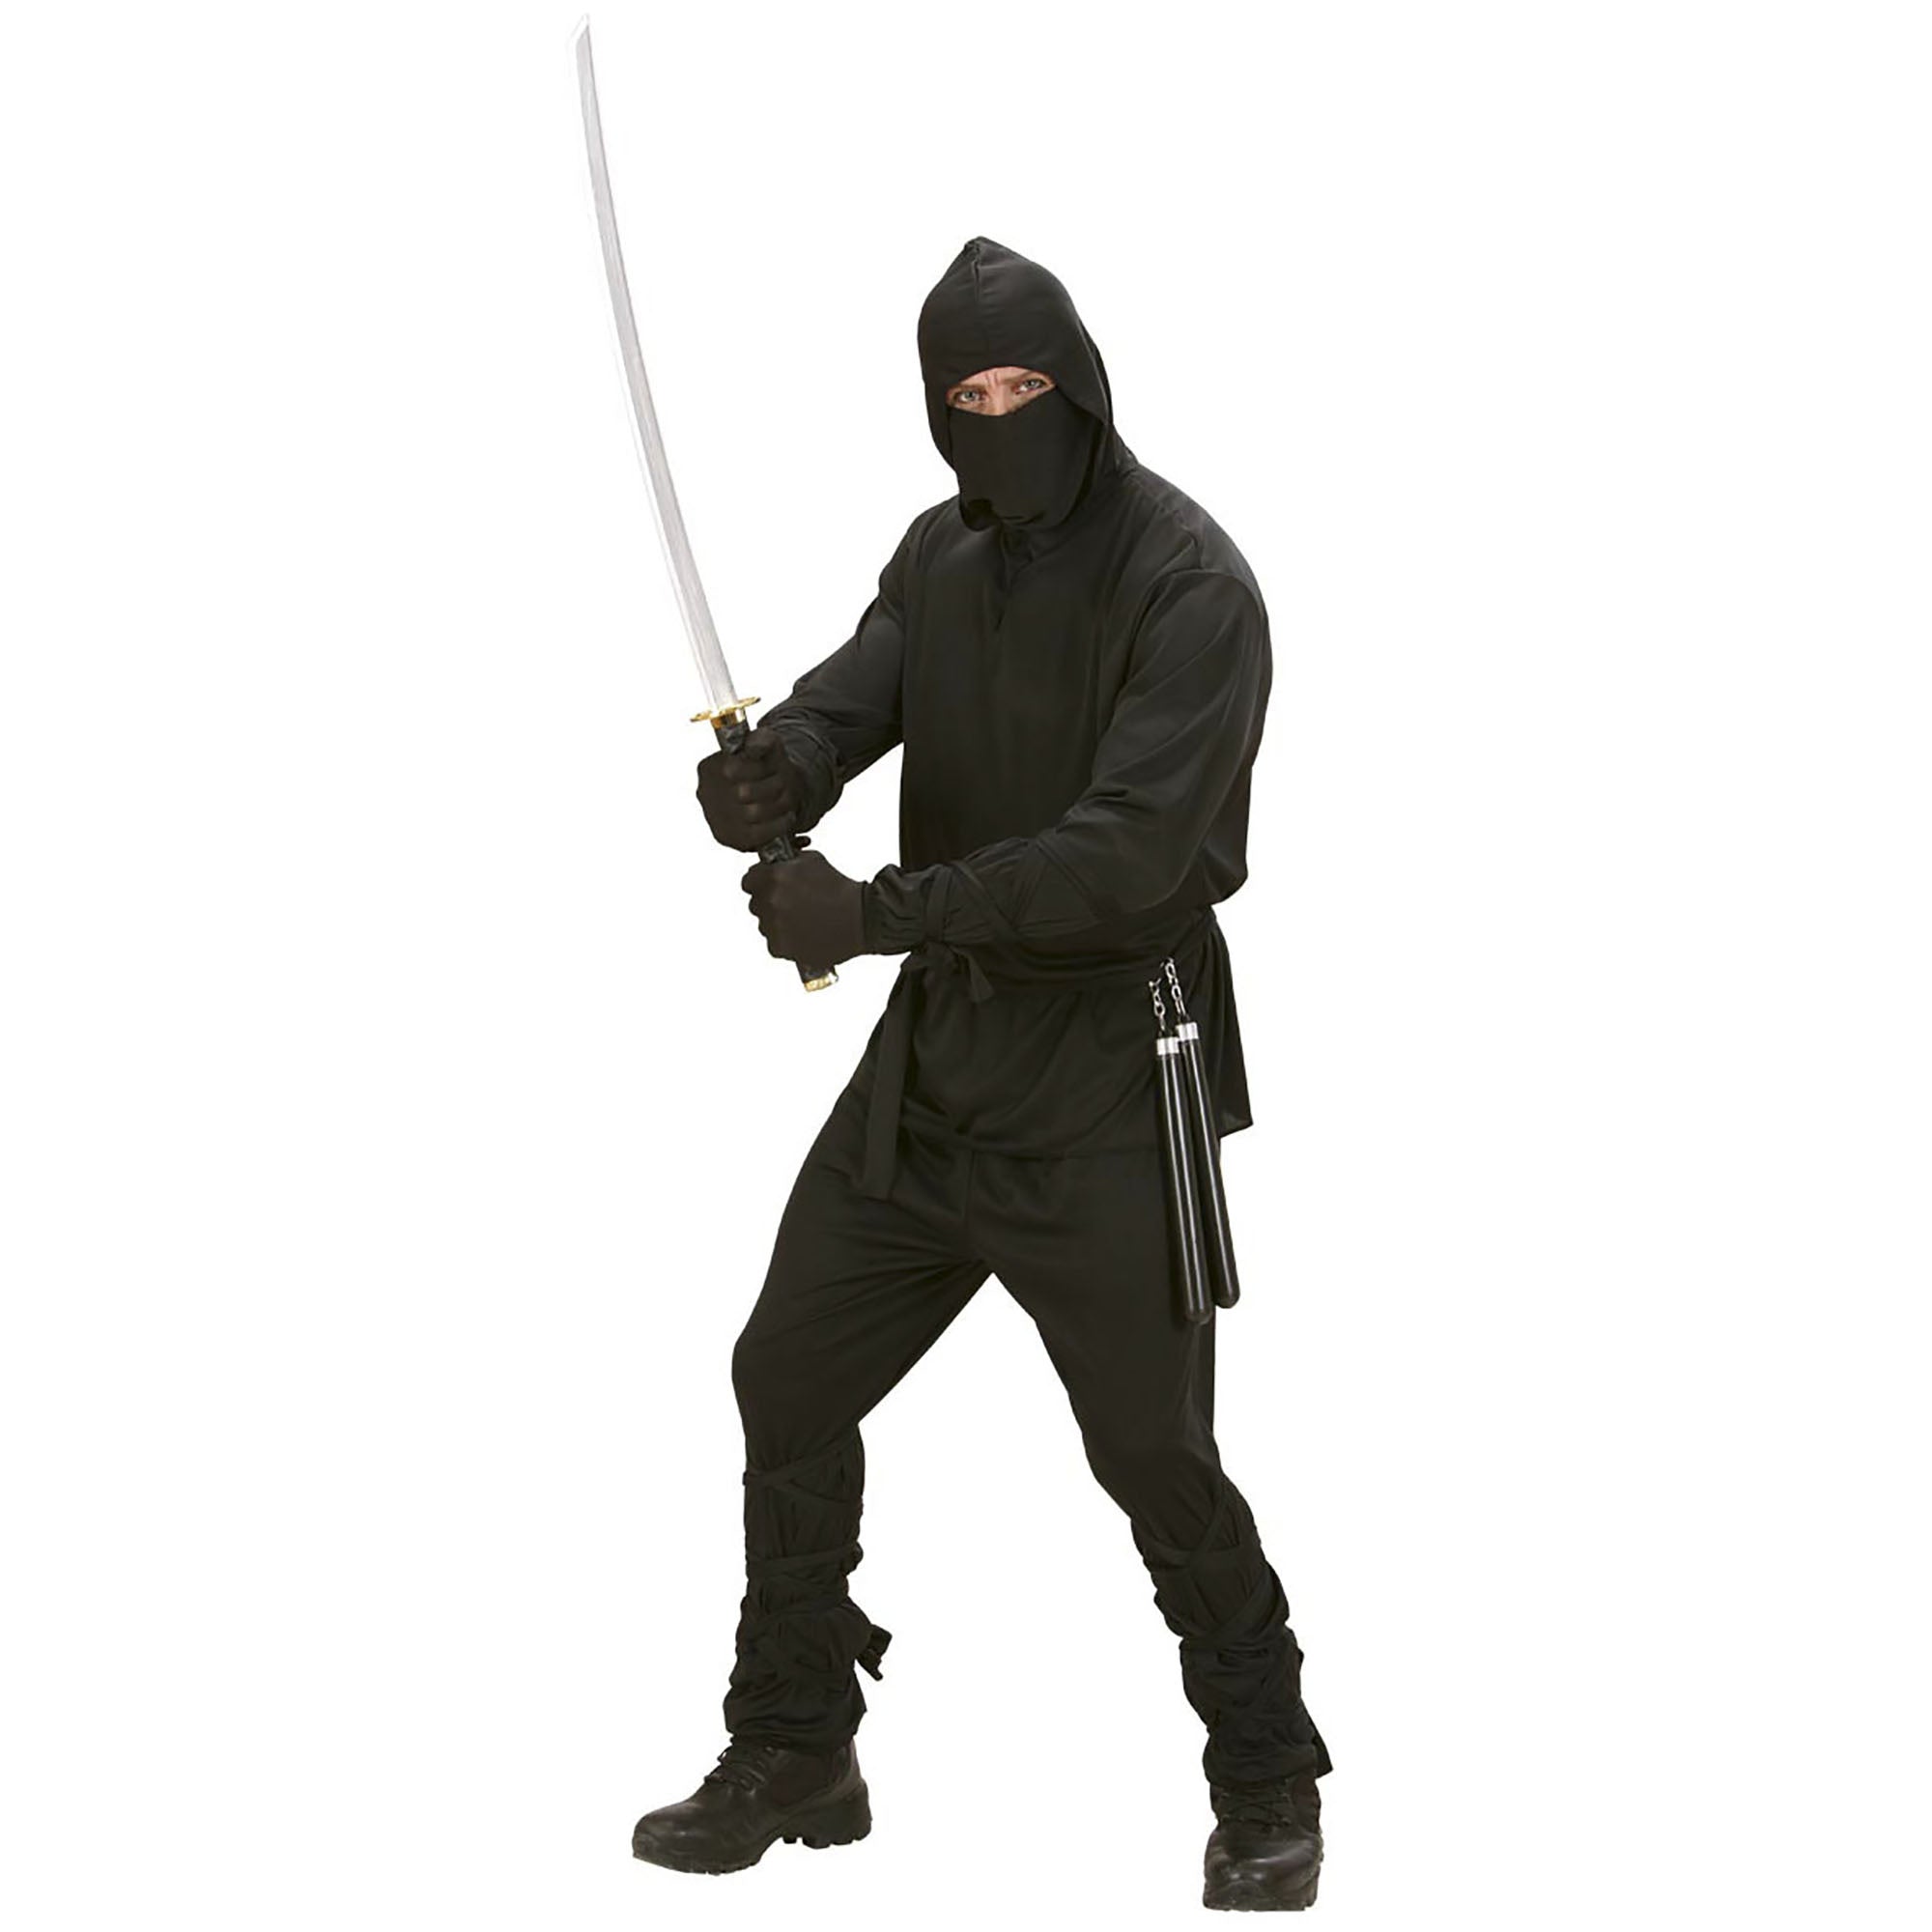 Widmann - Ninja & Samurai Kostuum - Fast Zwart Ninja Tokyo Kostuum Man - Zwart - Large - Carnavalskleding - Verkleedkleding